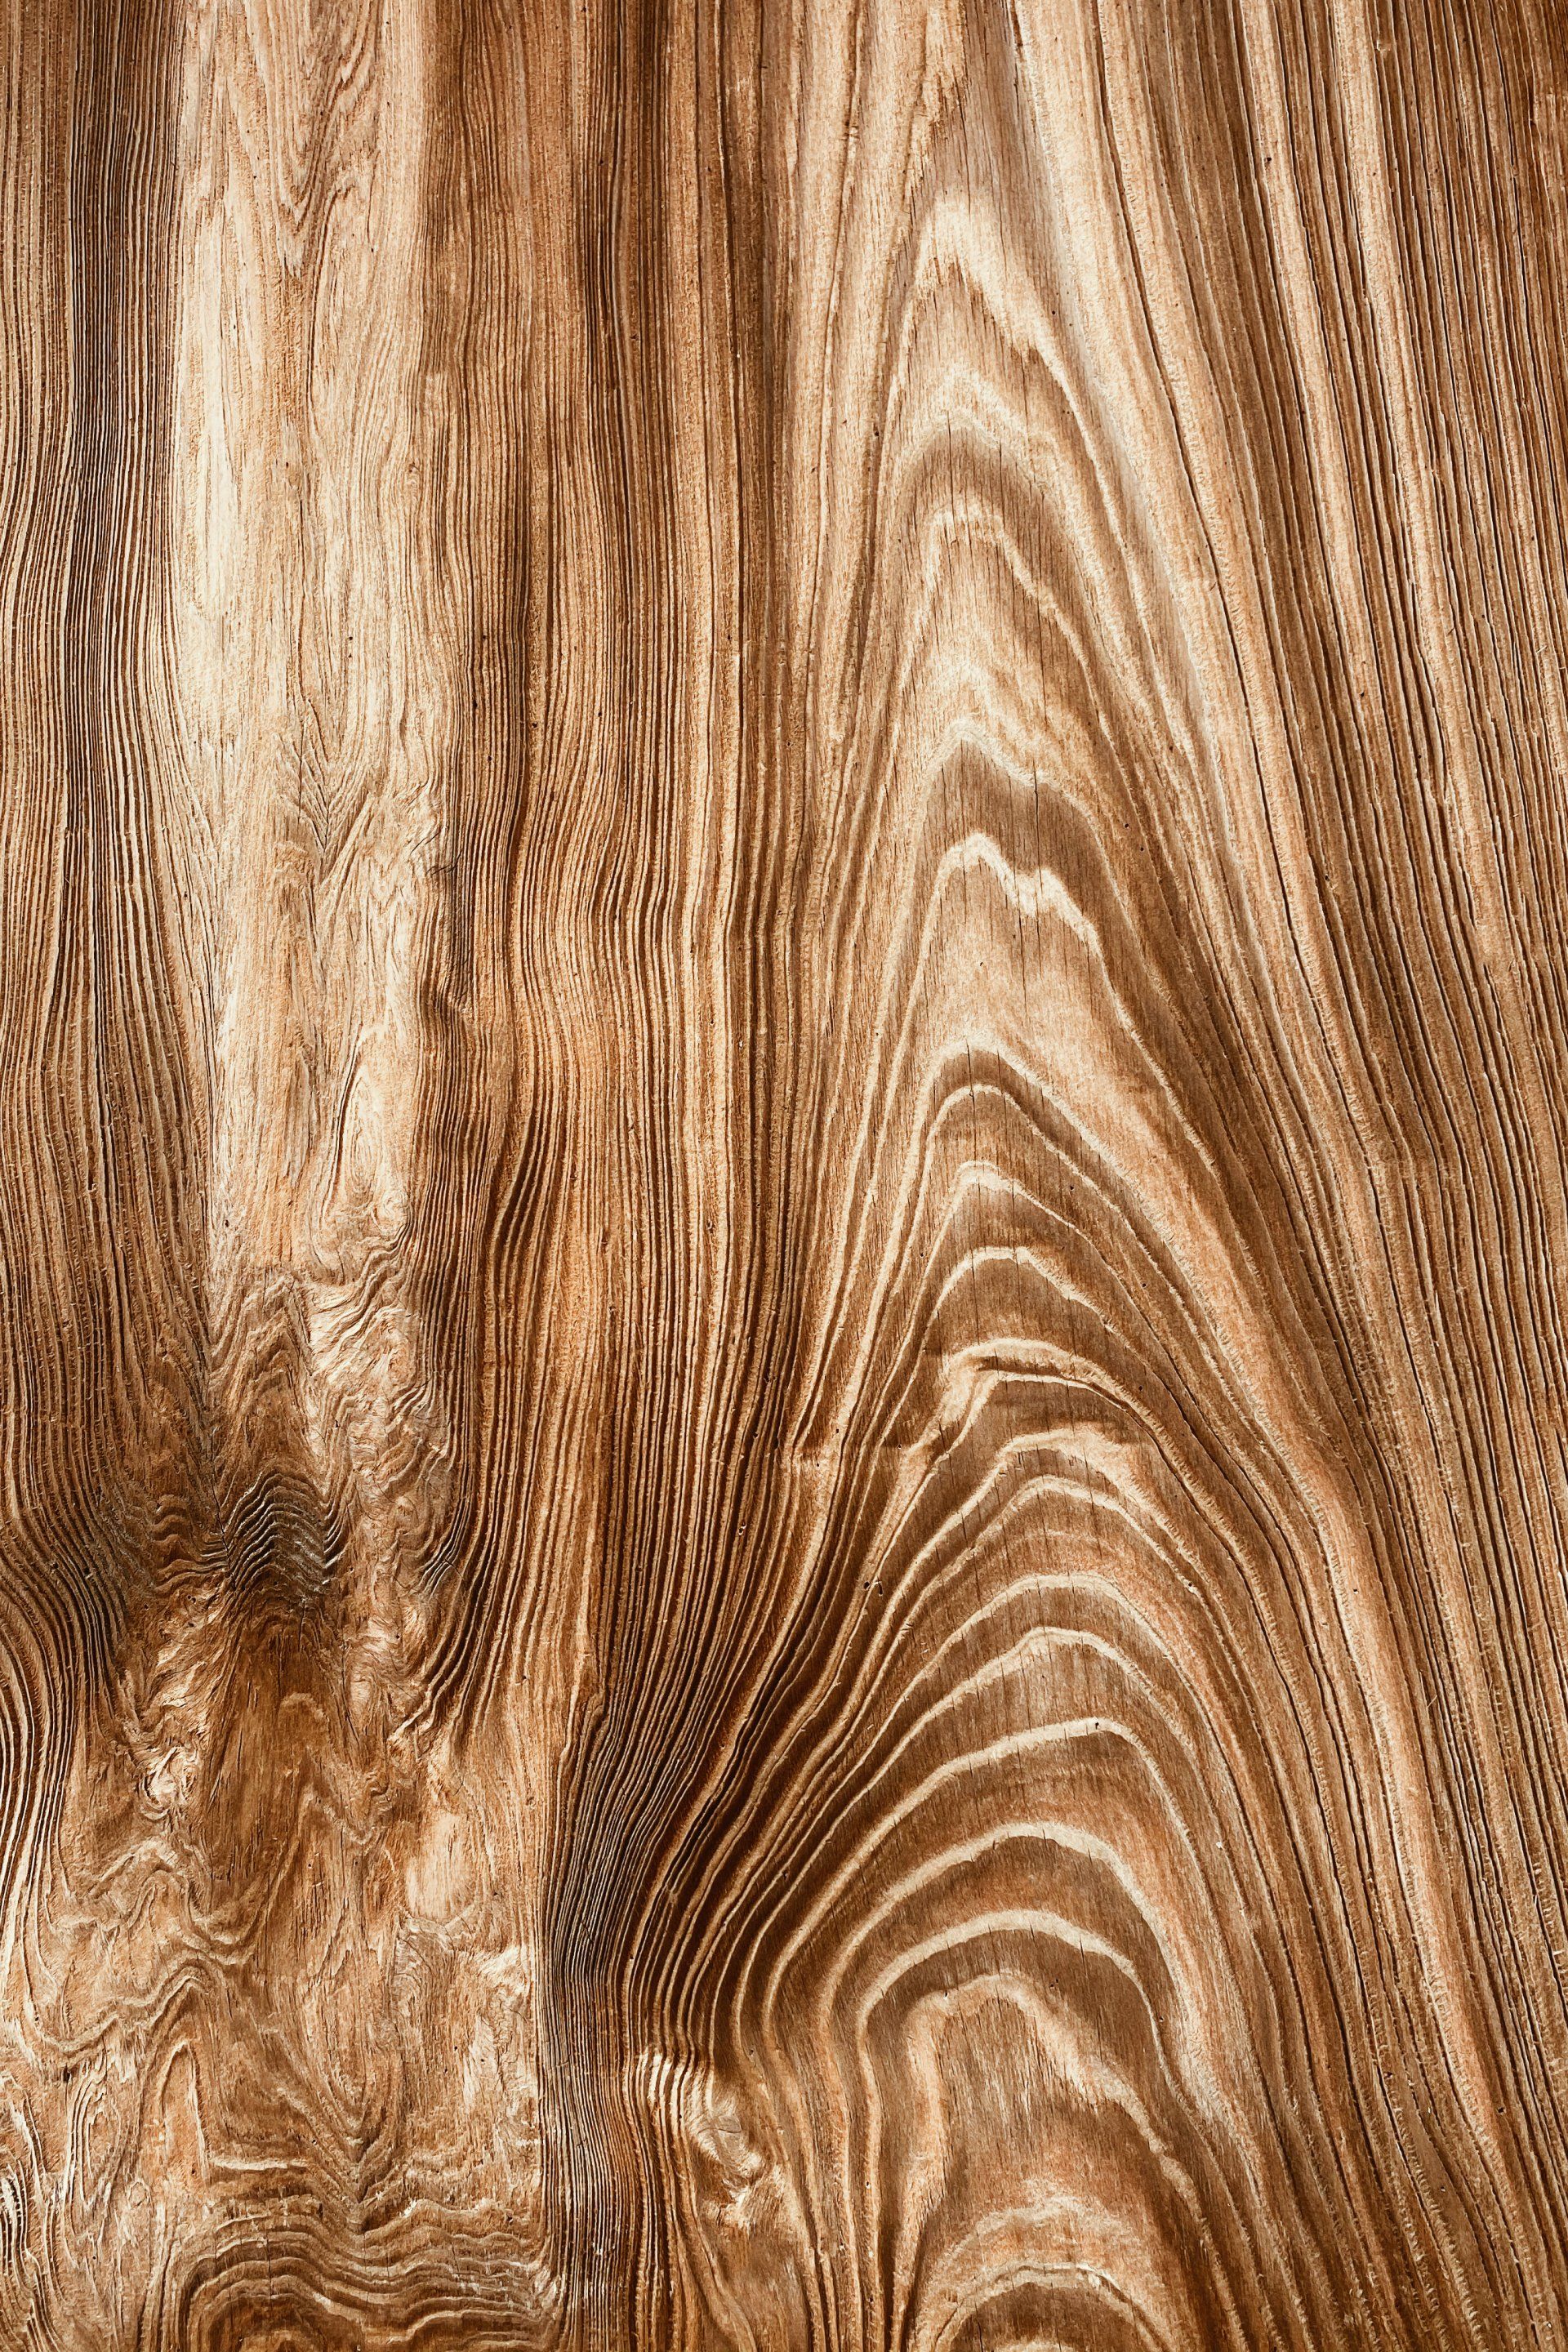 plain piece of hardwood flooring.